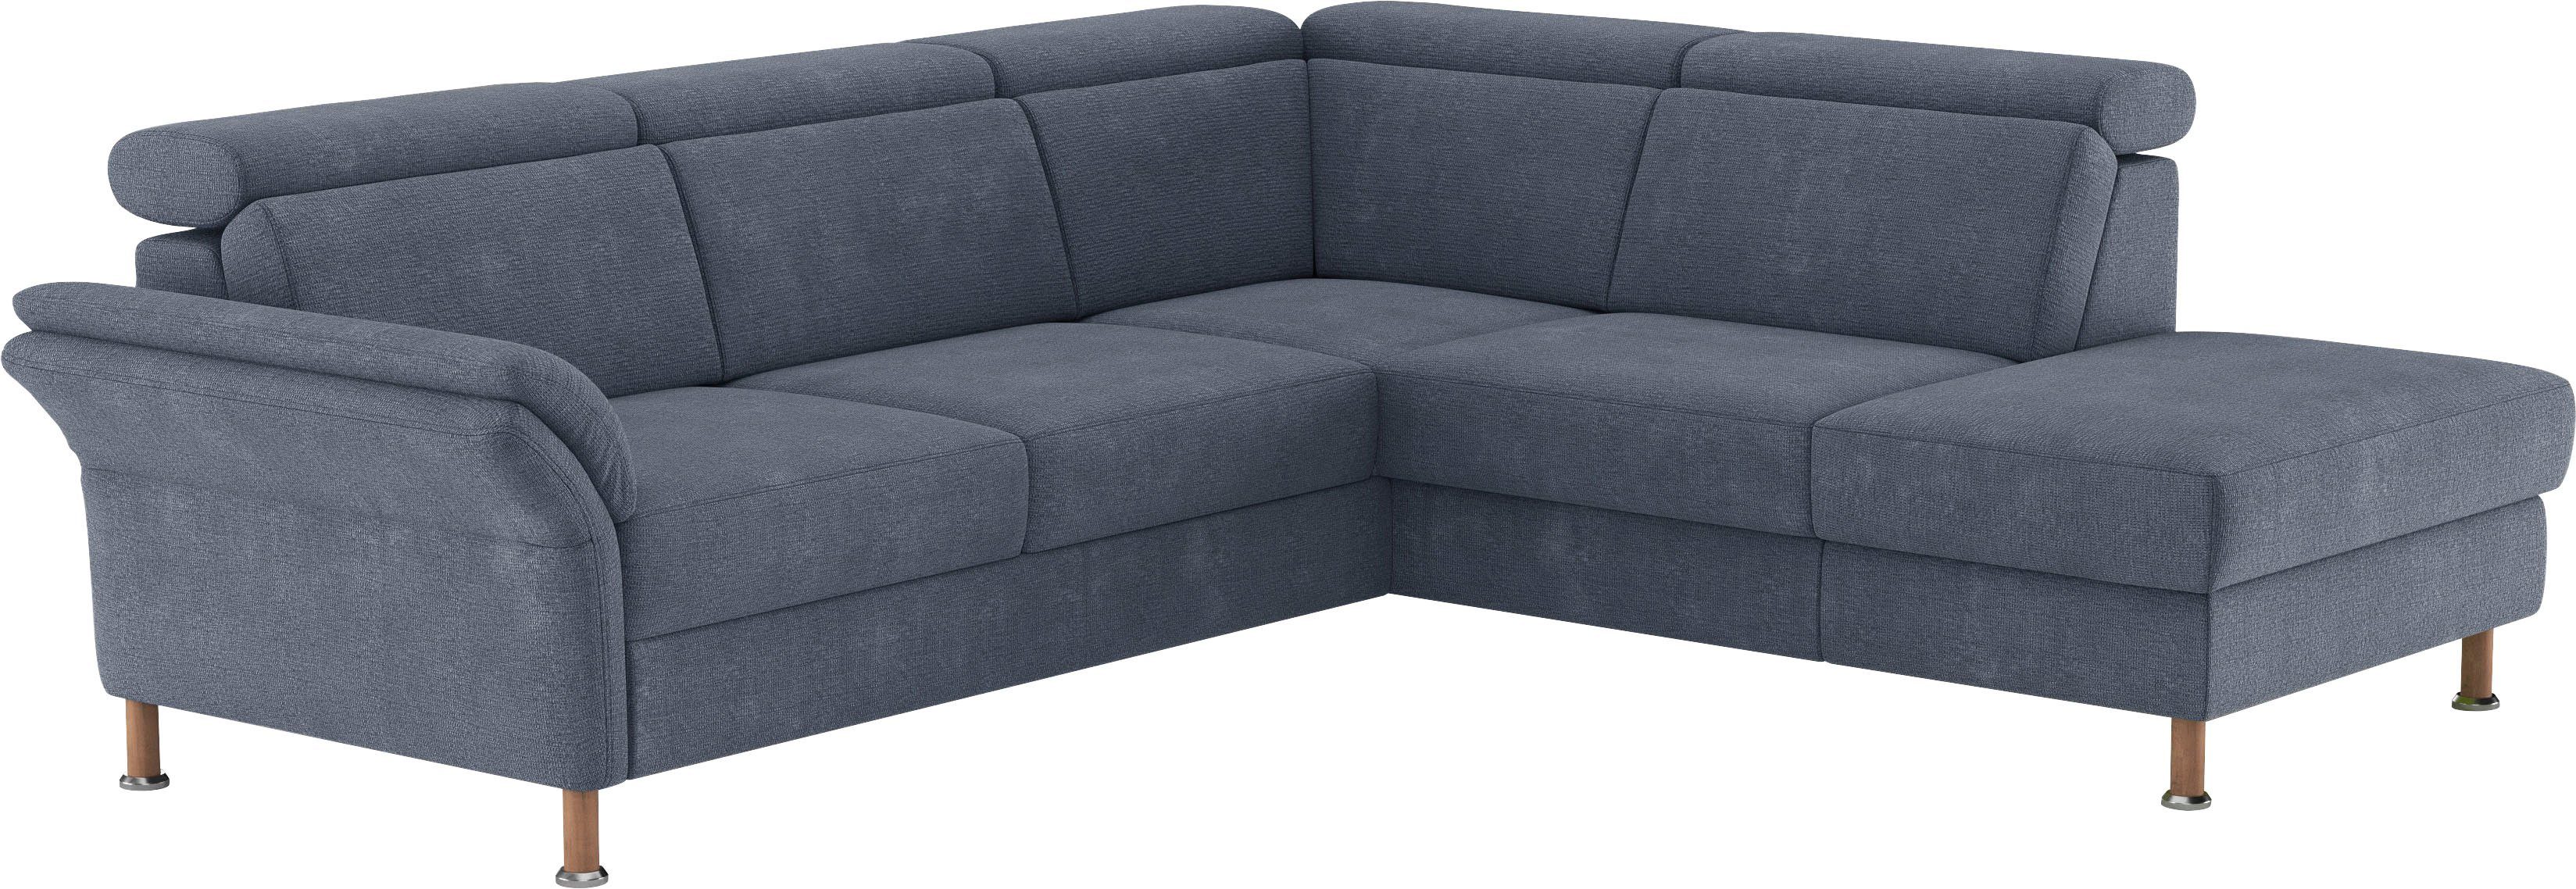 im Home Calypso, motorisch Relaxfunktion Ecksofa affaire mit 2,5- Sitzer Sofa